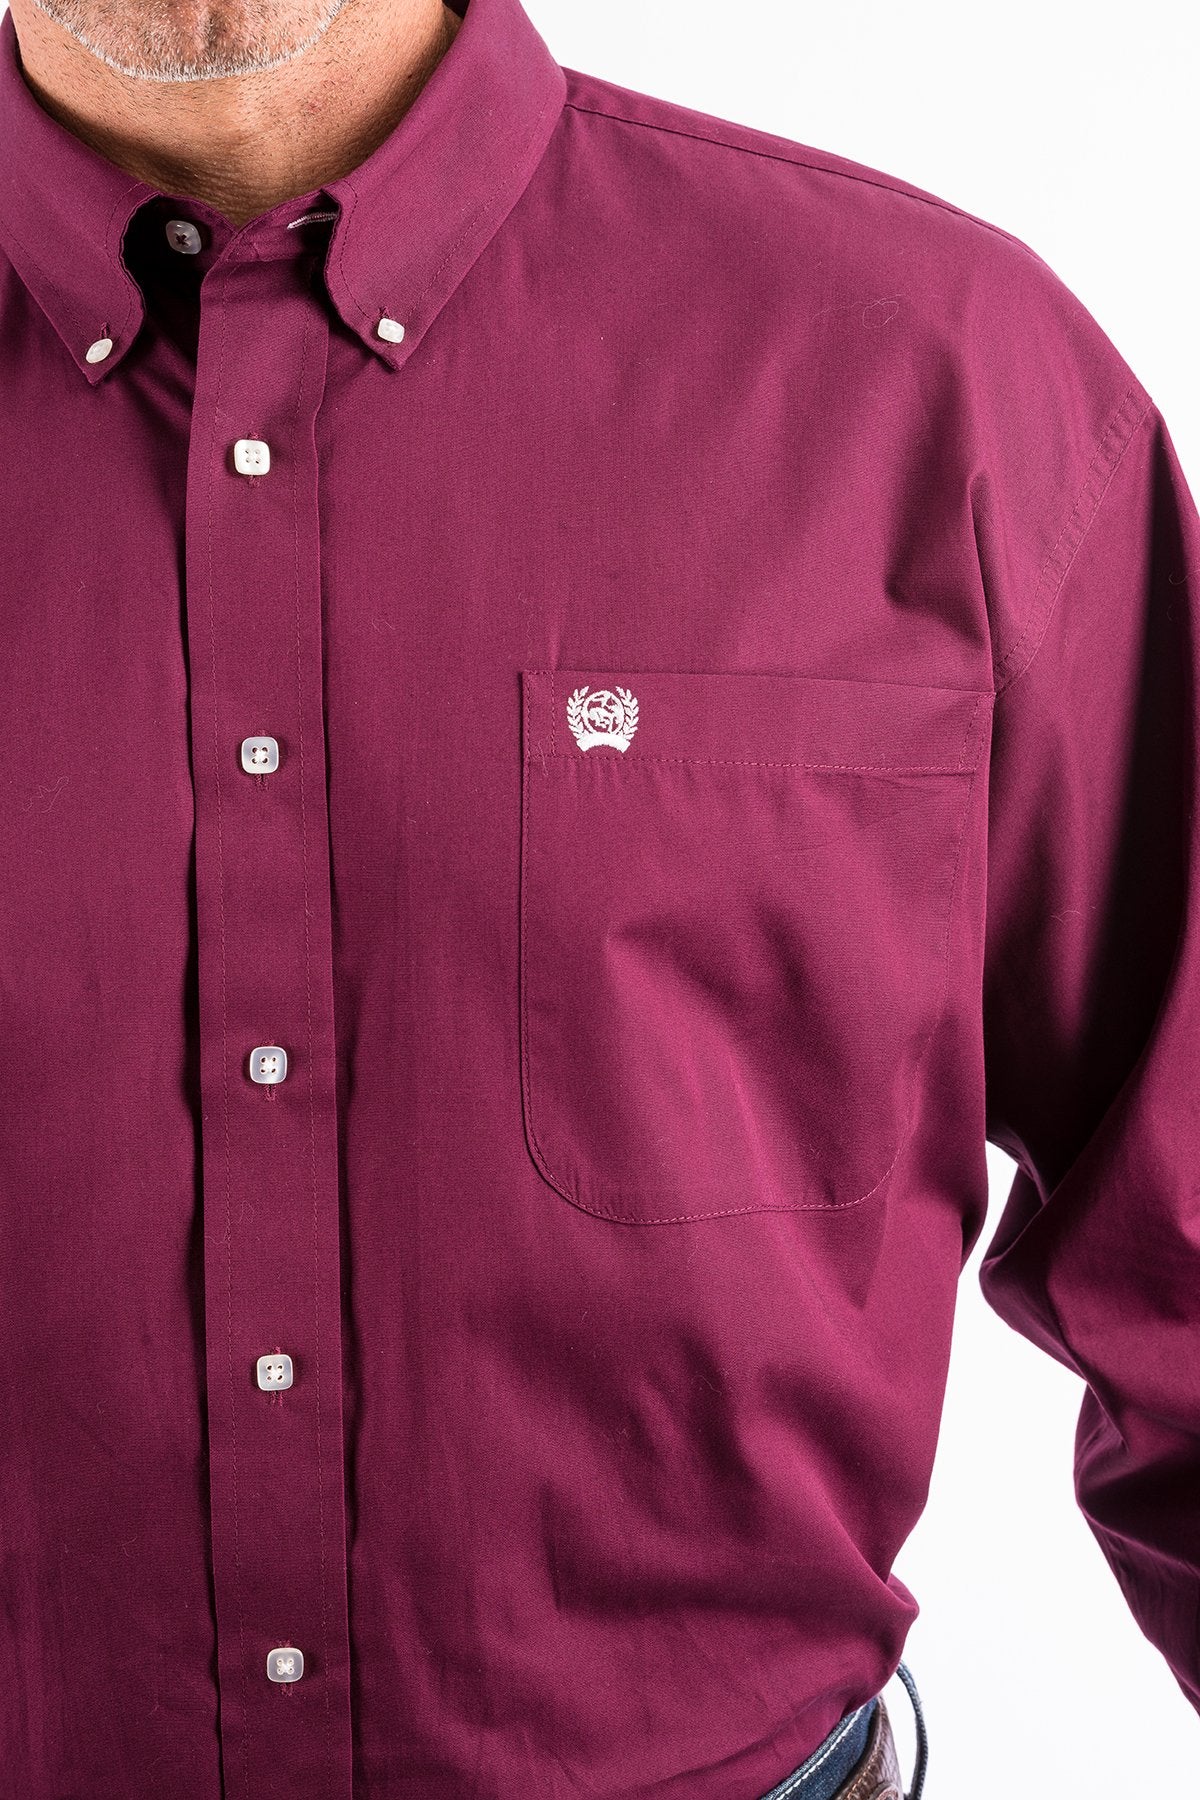 Cinch Men's Classic Fit Solid Burgundy Western Shirt